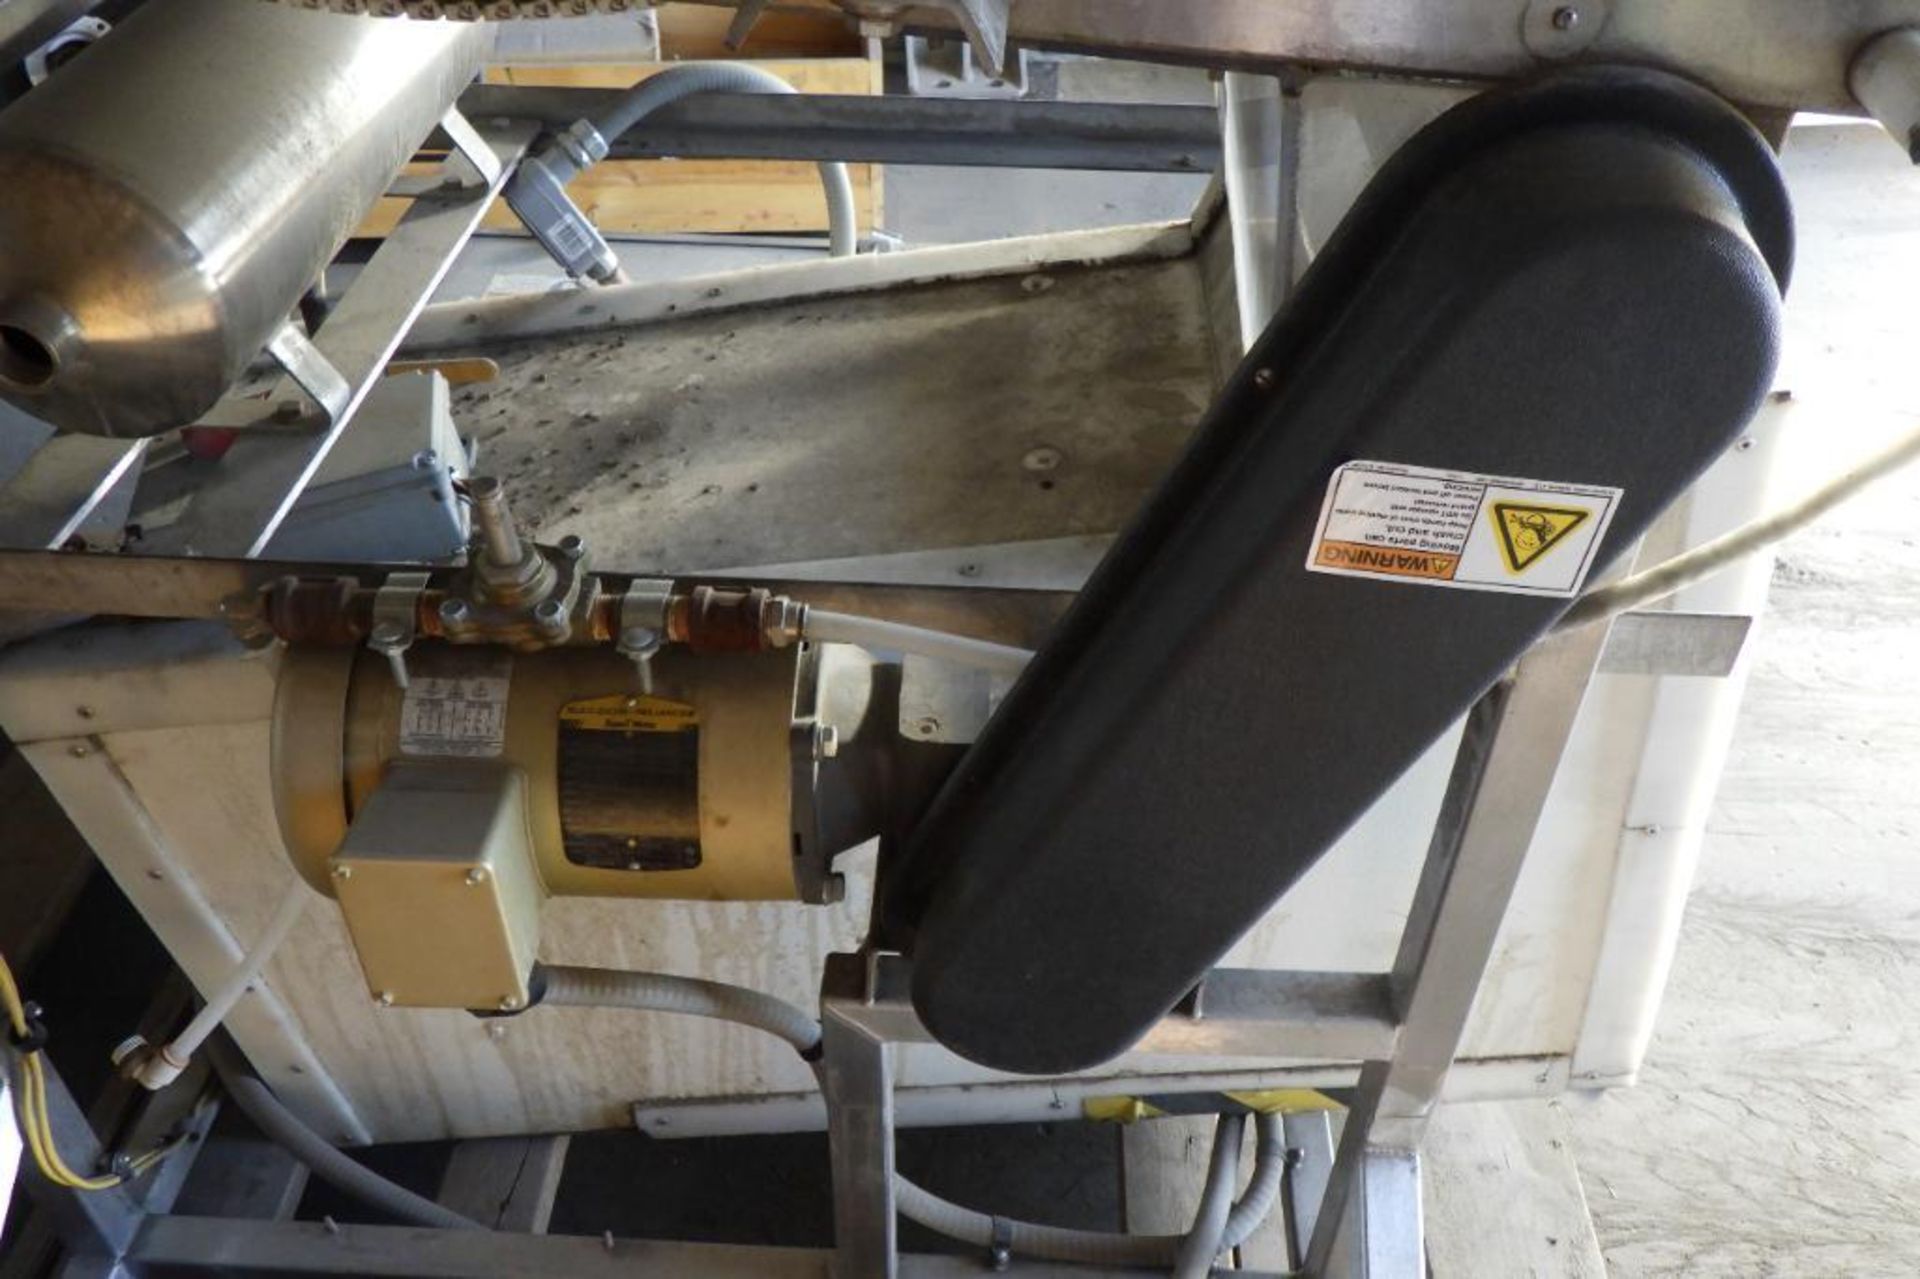 Safeline metal detector with conveyor - Image 11 of 16